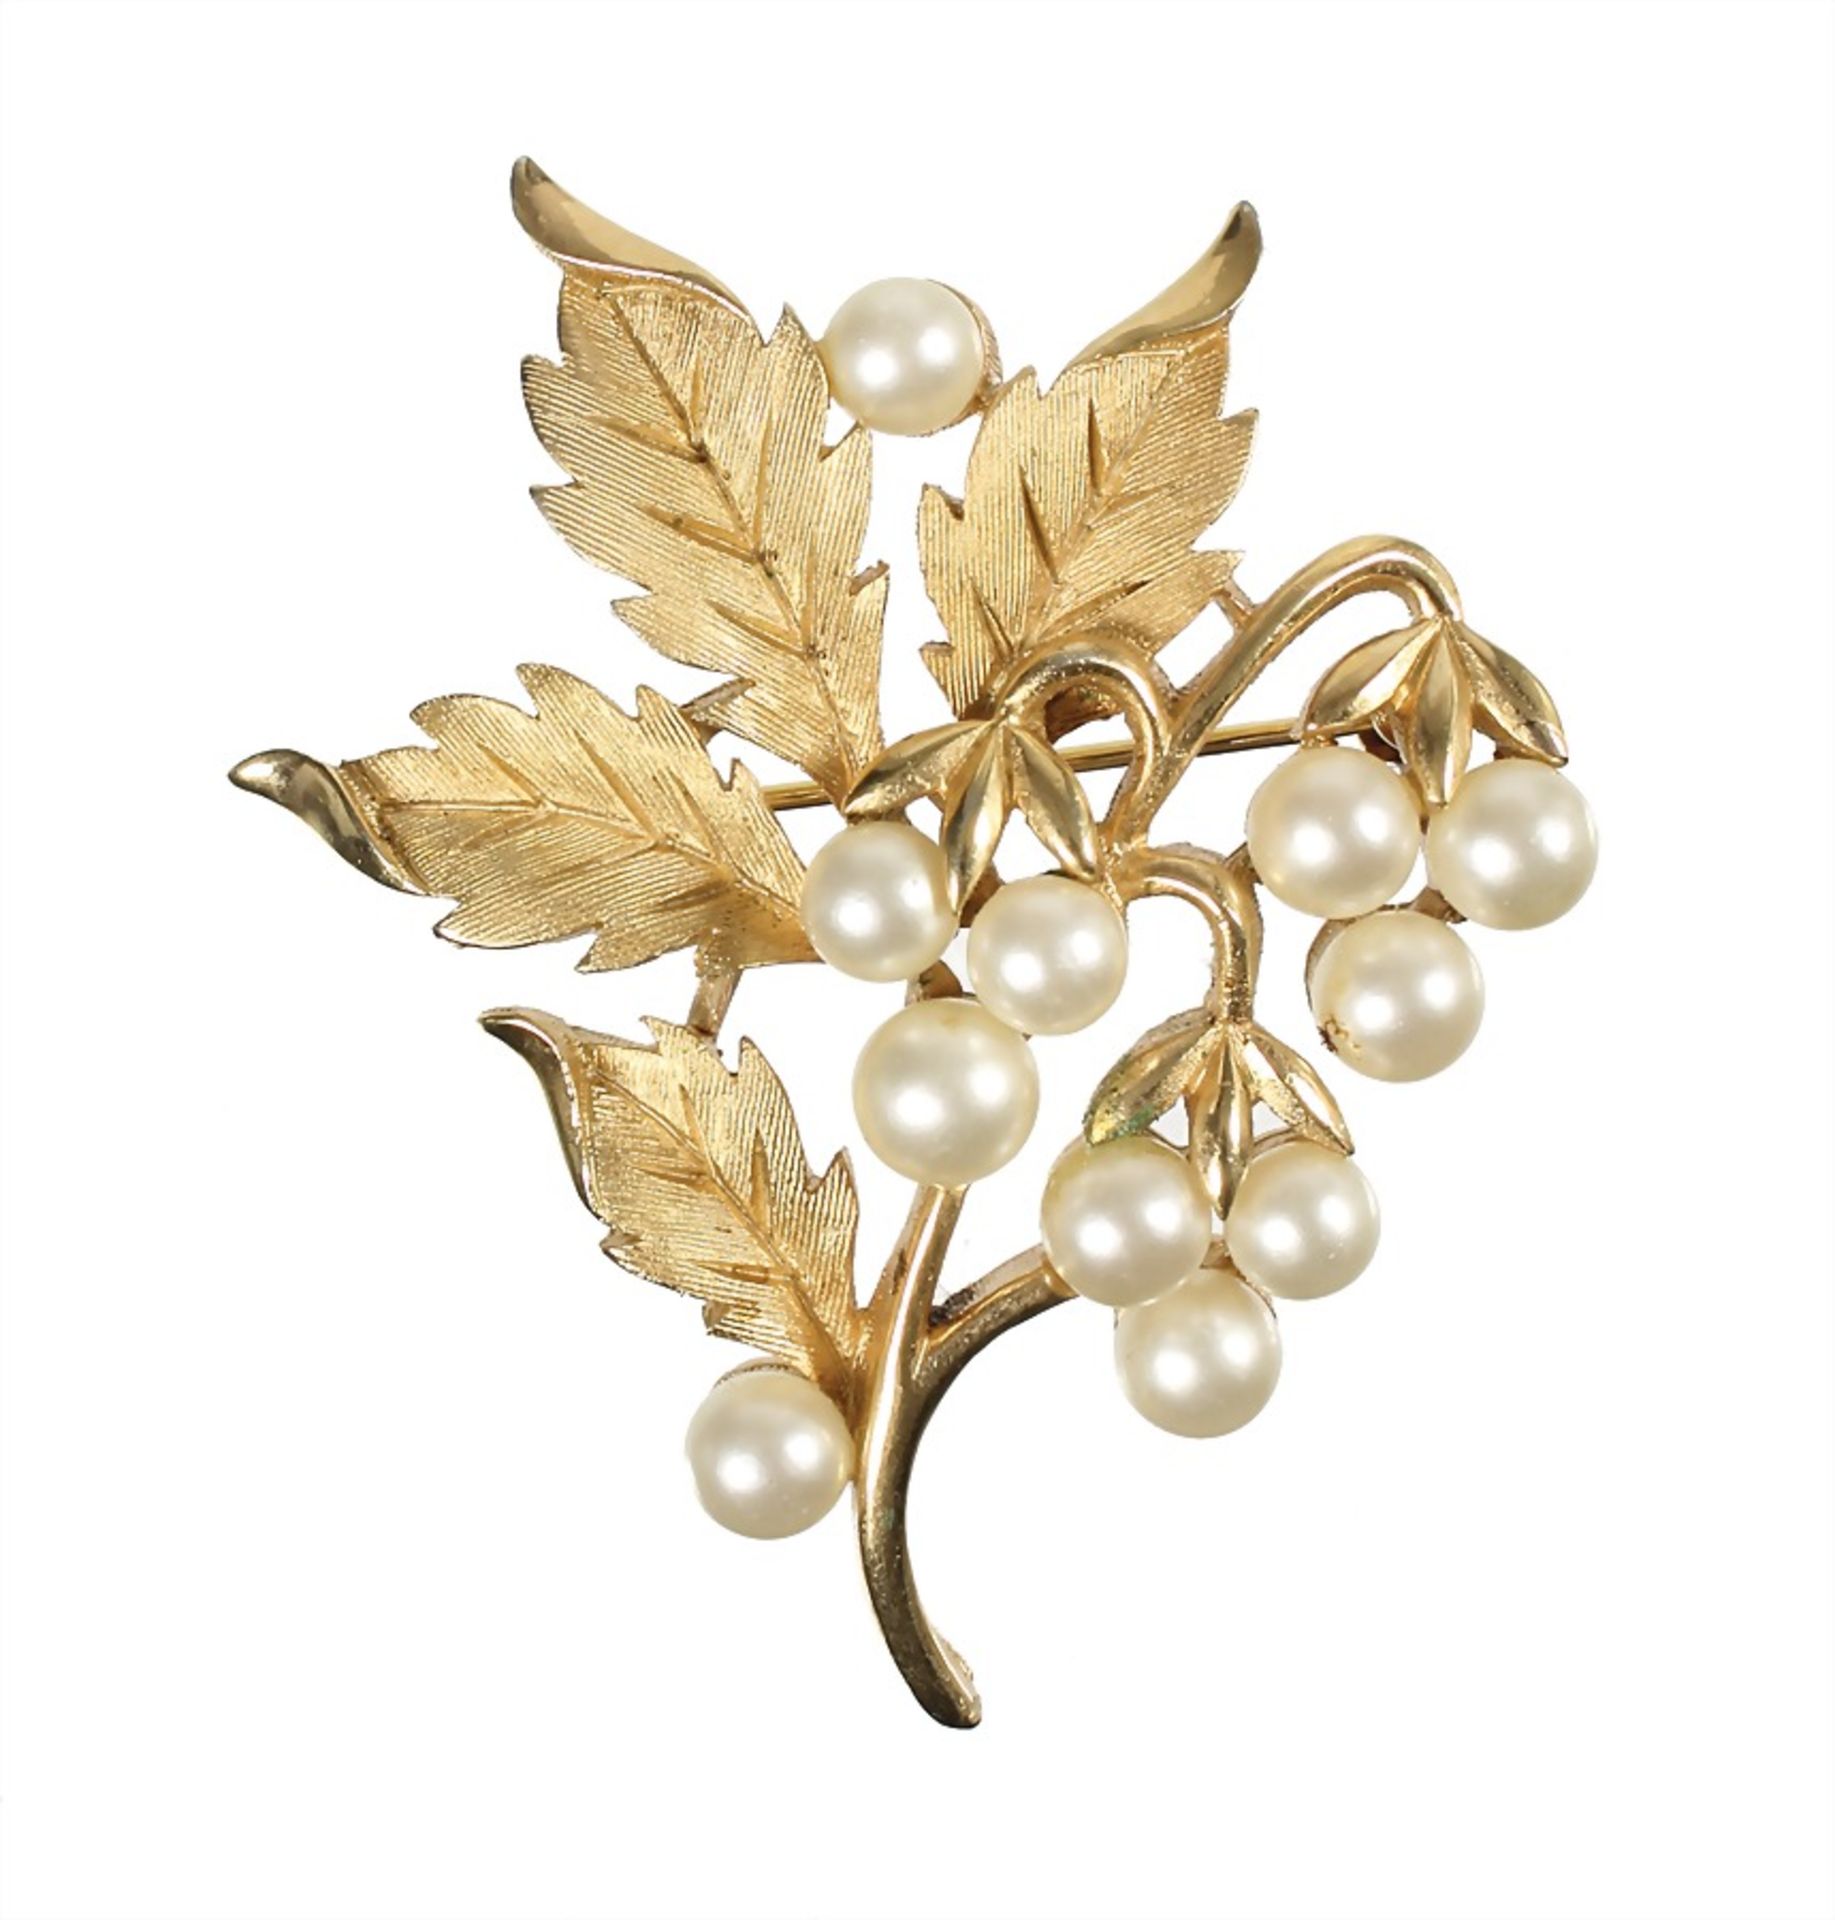 brooch, "TRIFARI", gold colored metal , signed TRIFARI, white artificial pearls, c. 44.0 x 52.0